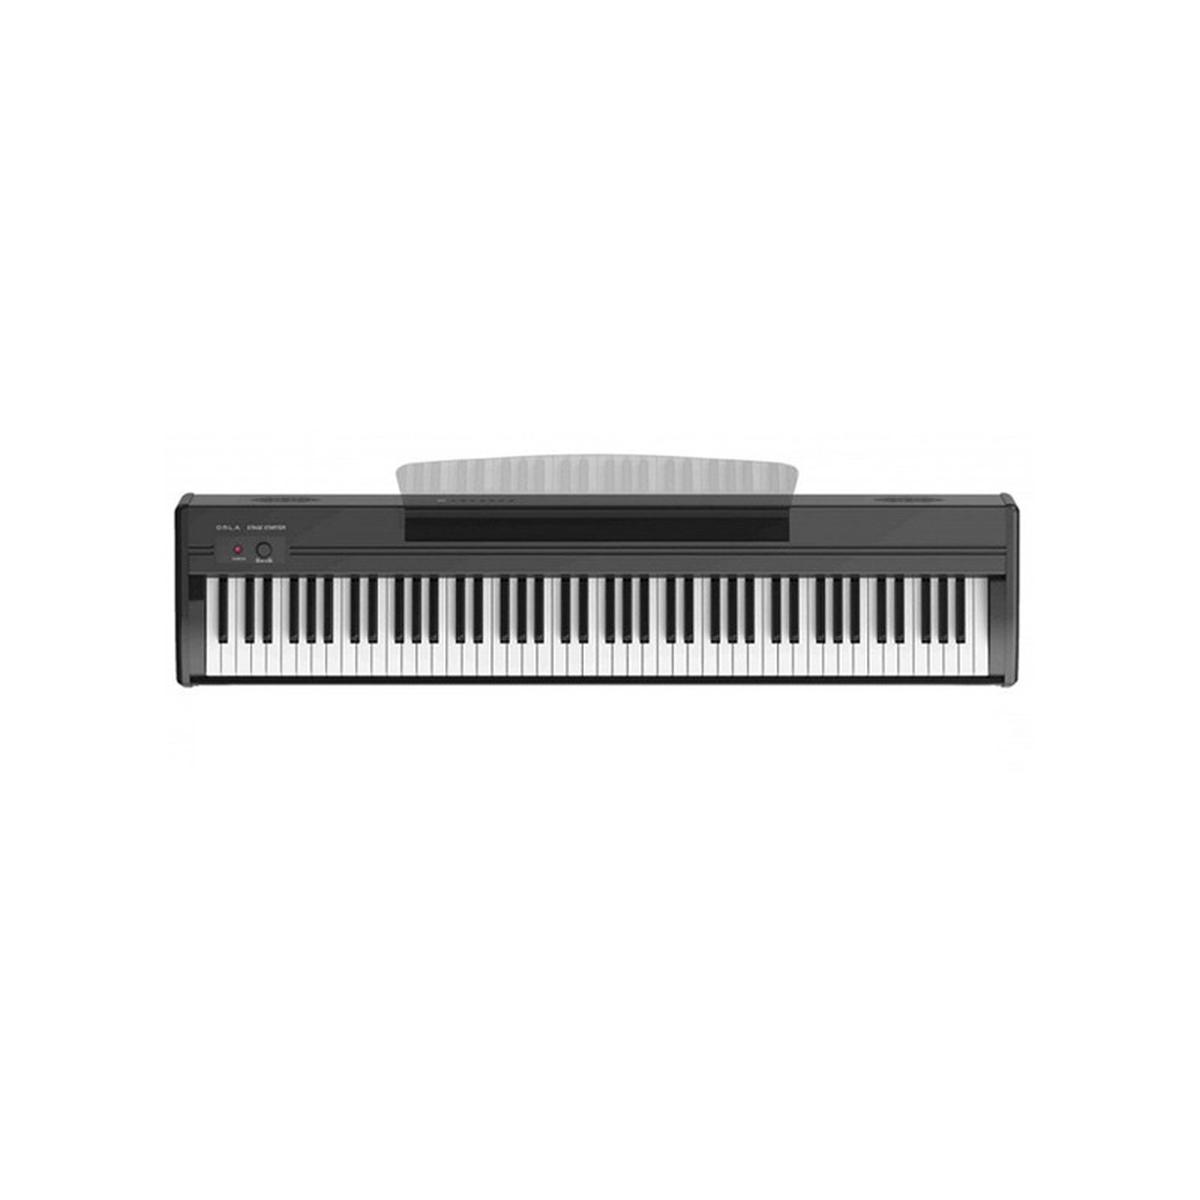 ORLA Stage Starter DLS pianoforte digitale 88 tasti pesati